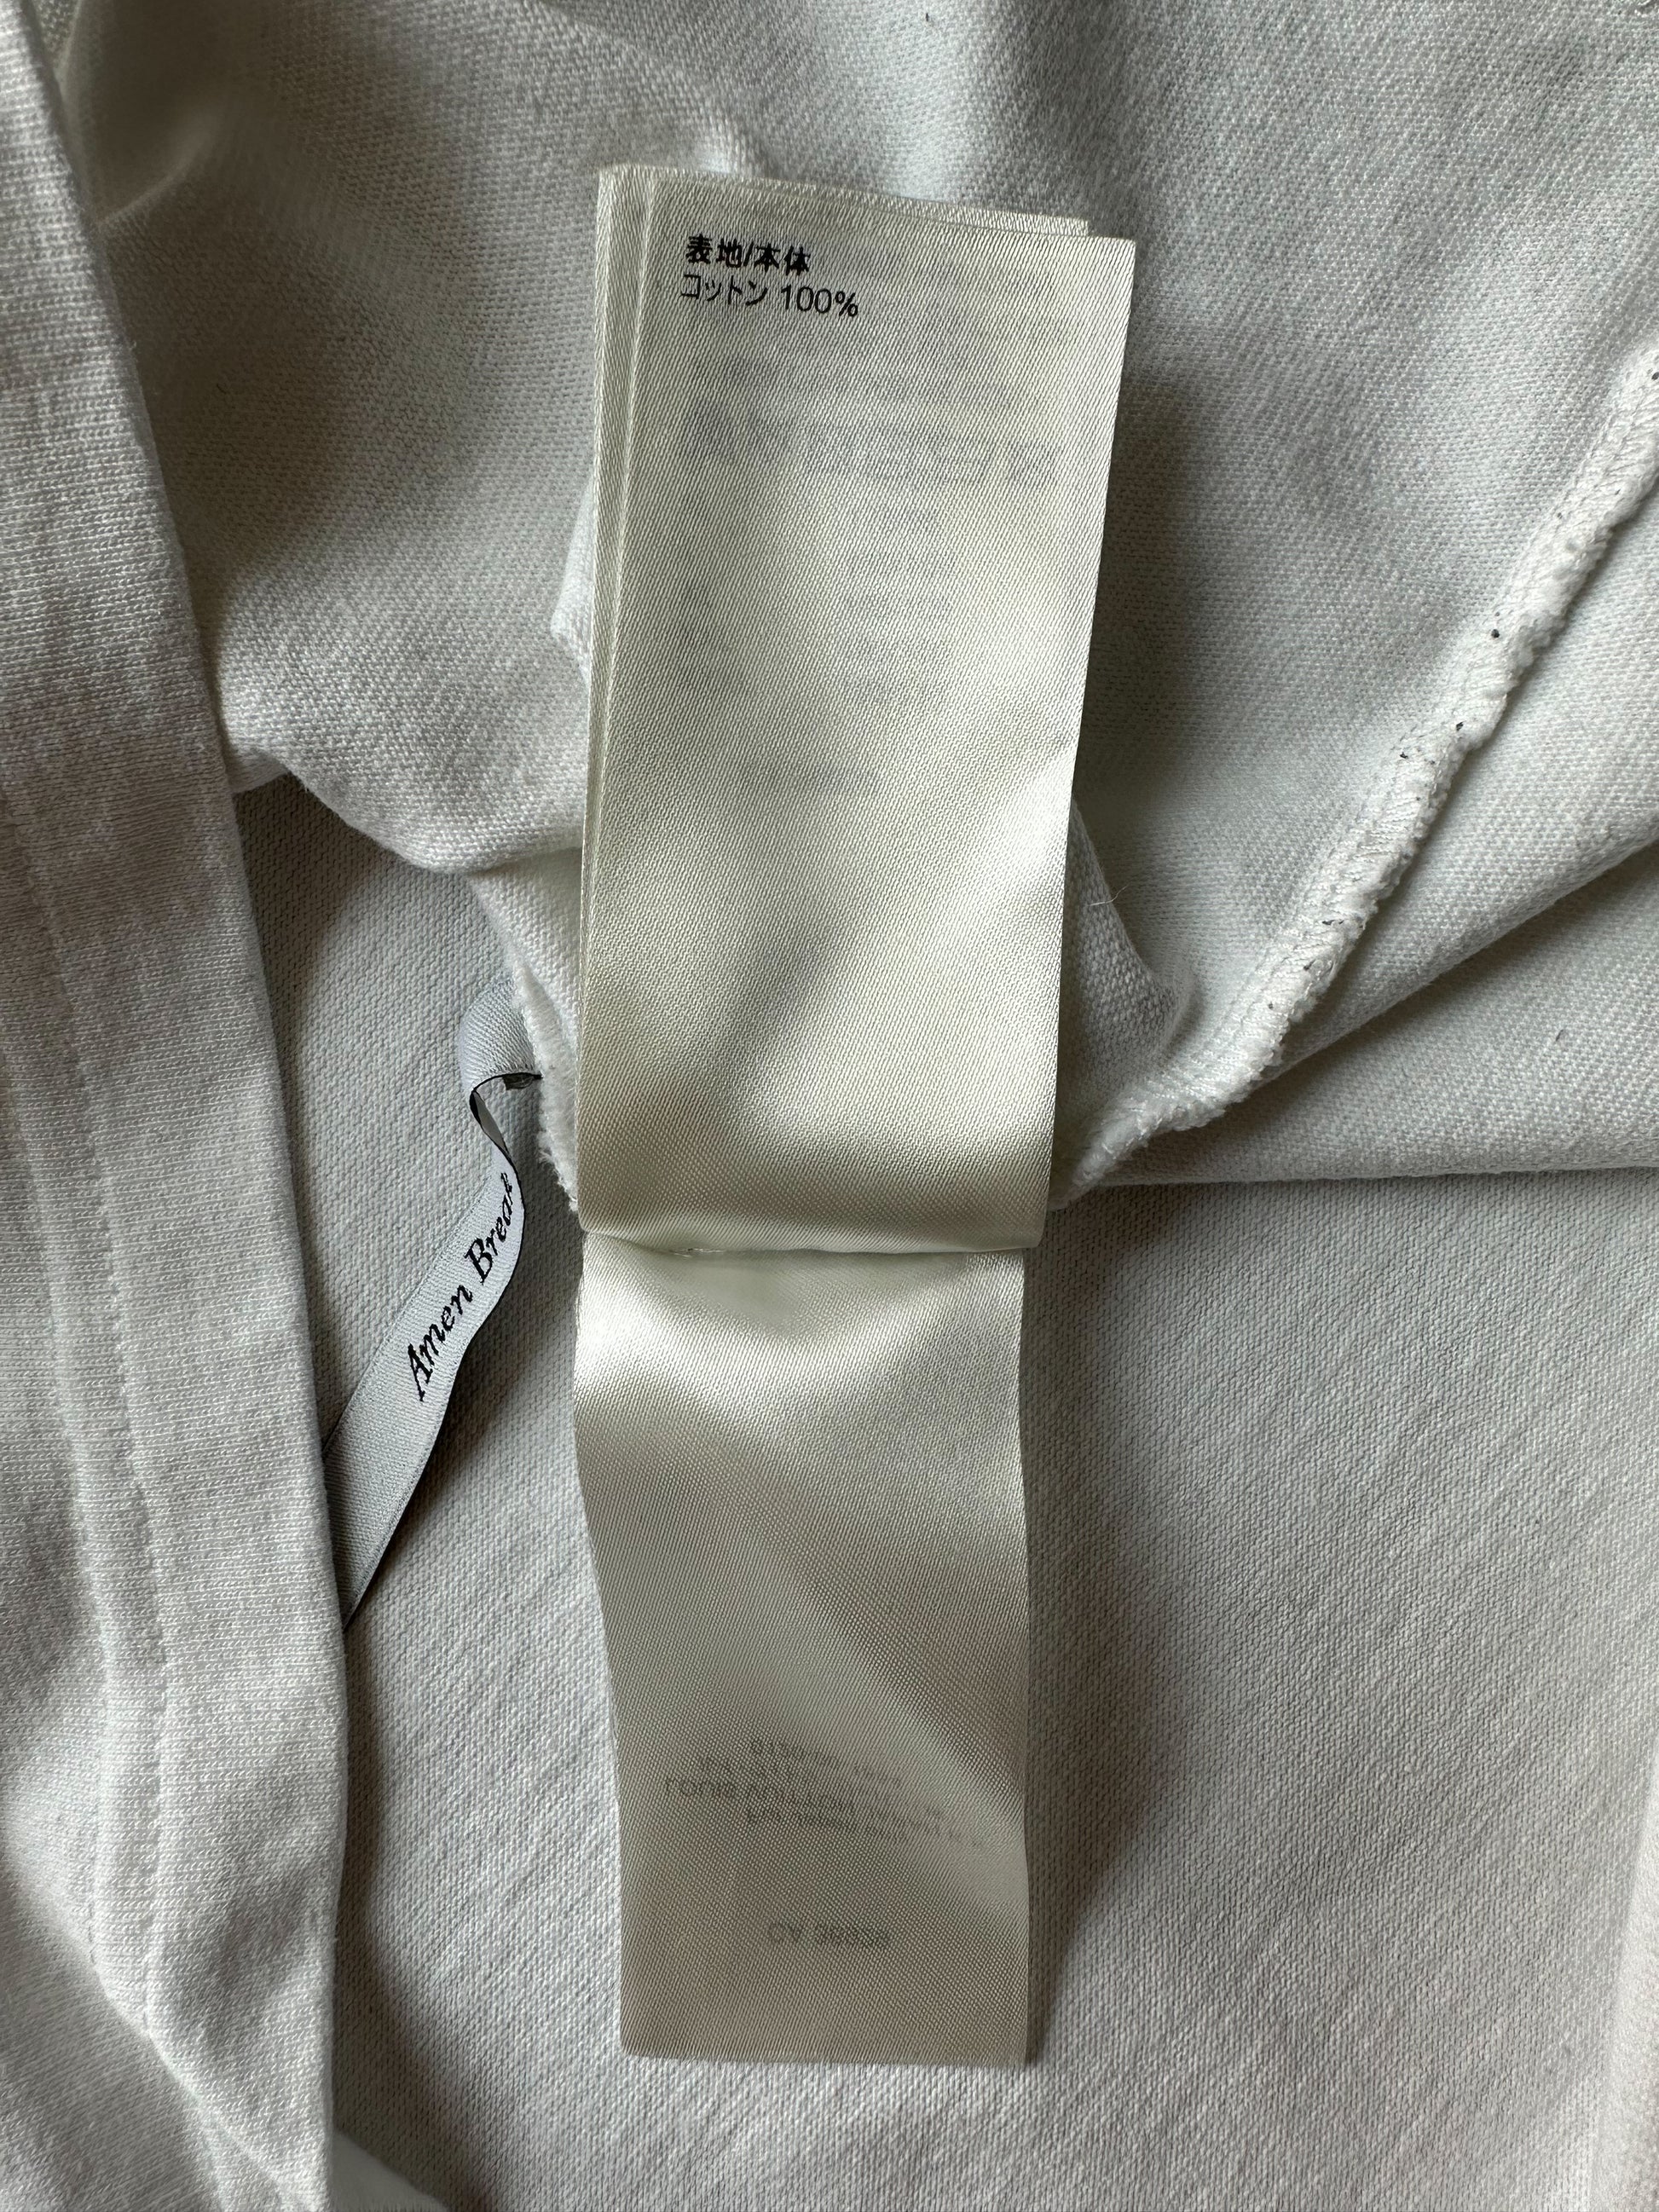 Louis Vuitton Do A Kickflip Shirt - High-Quality Printed Brand